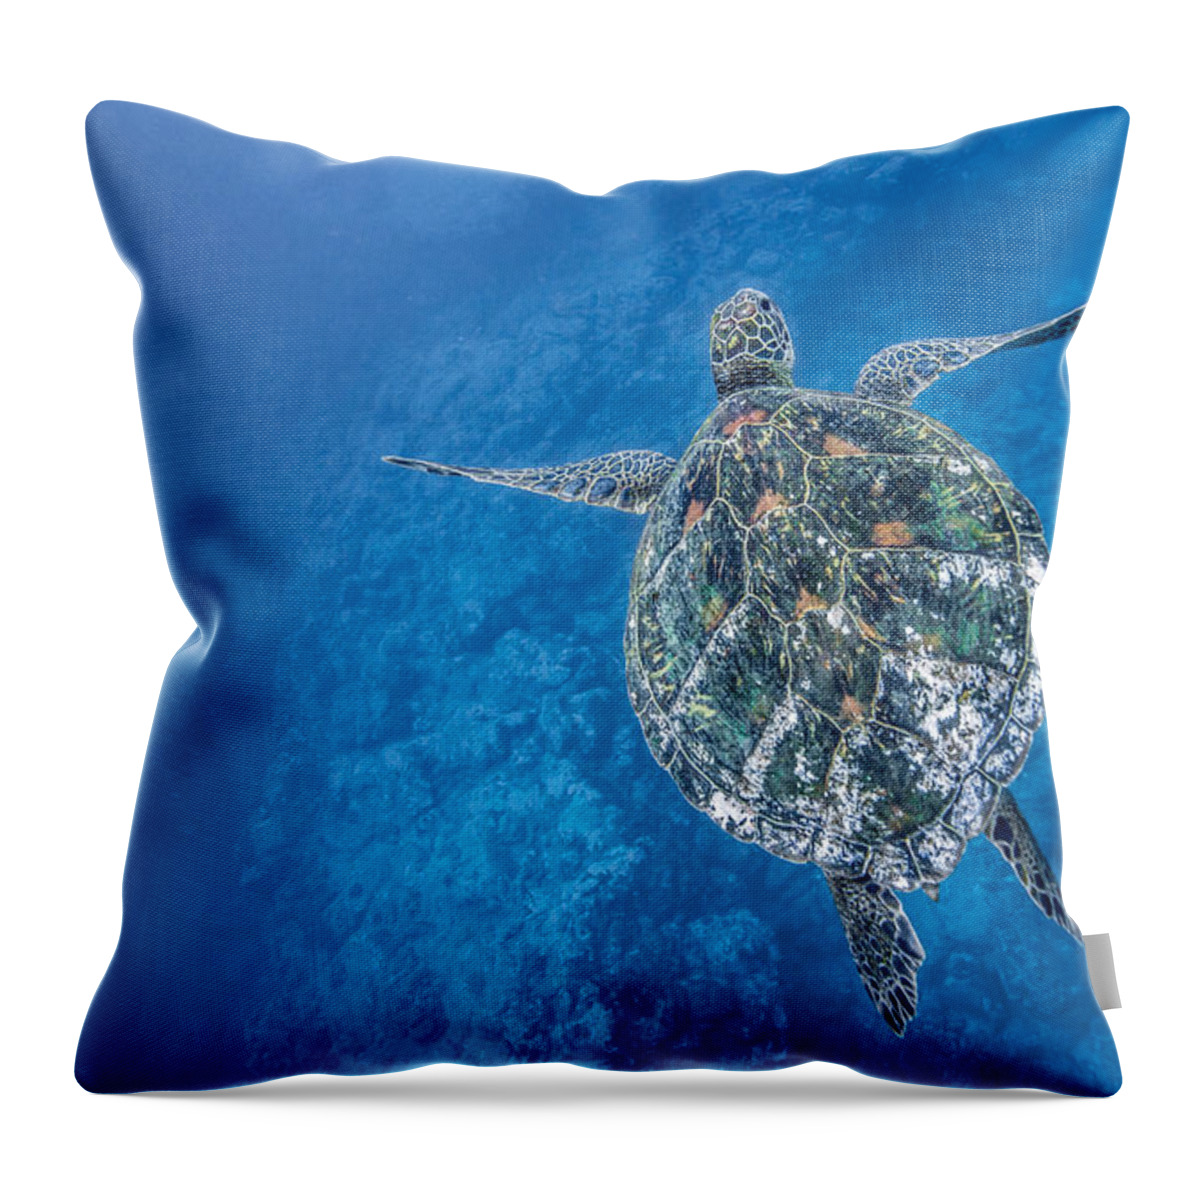 Hawaiian Sea Turtle Throw Pillow featuring the photograph Deep Blue Turtle by Leonardo Dale